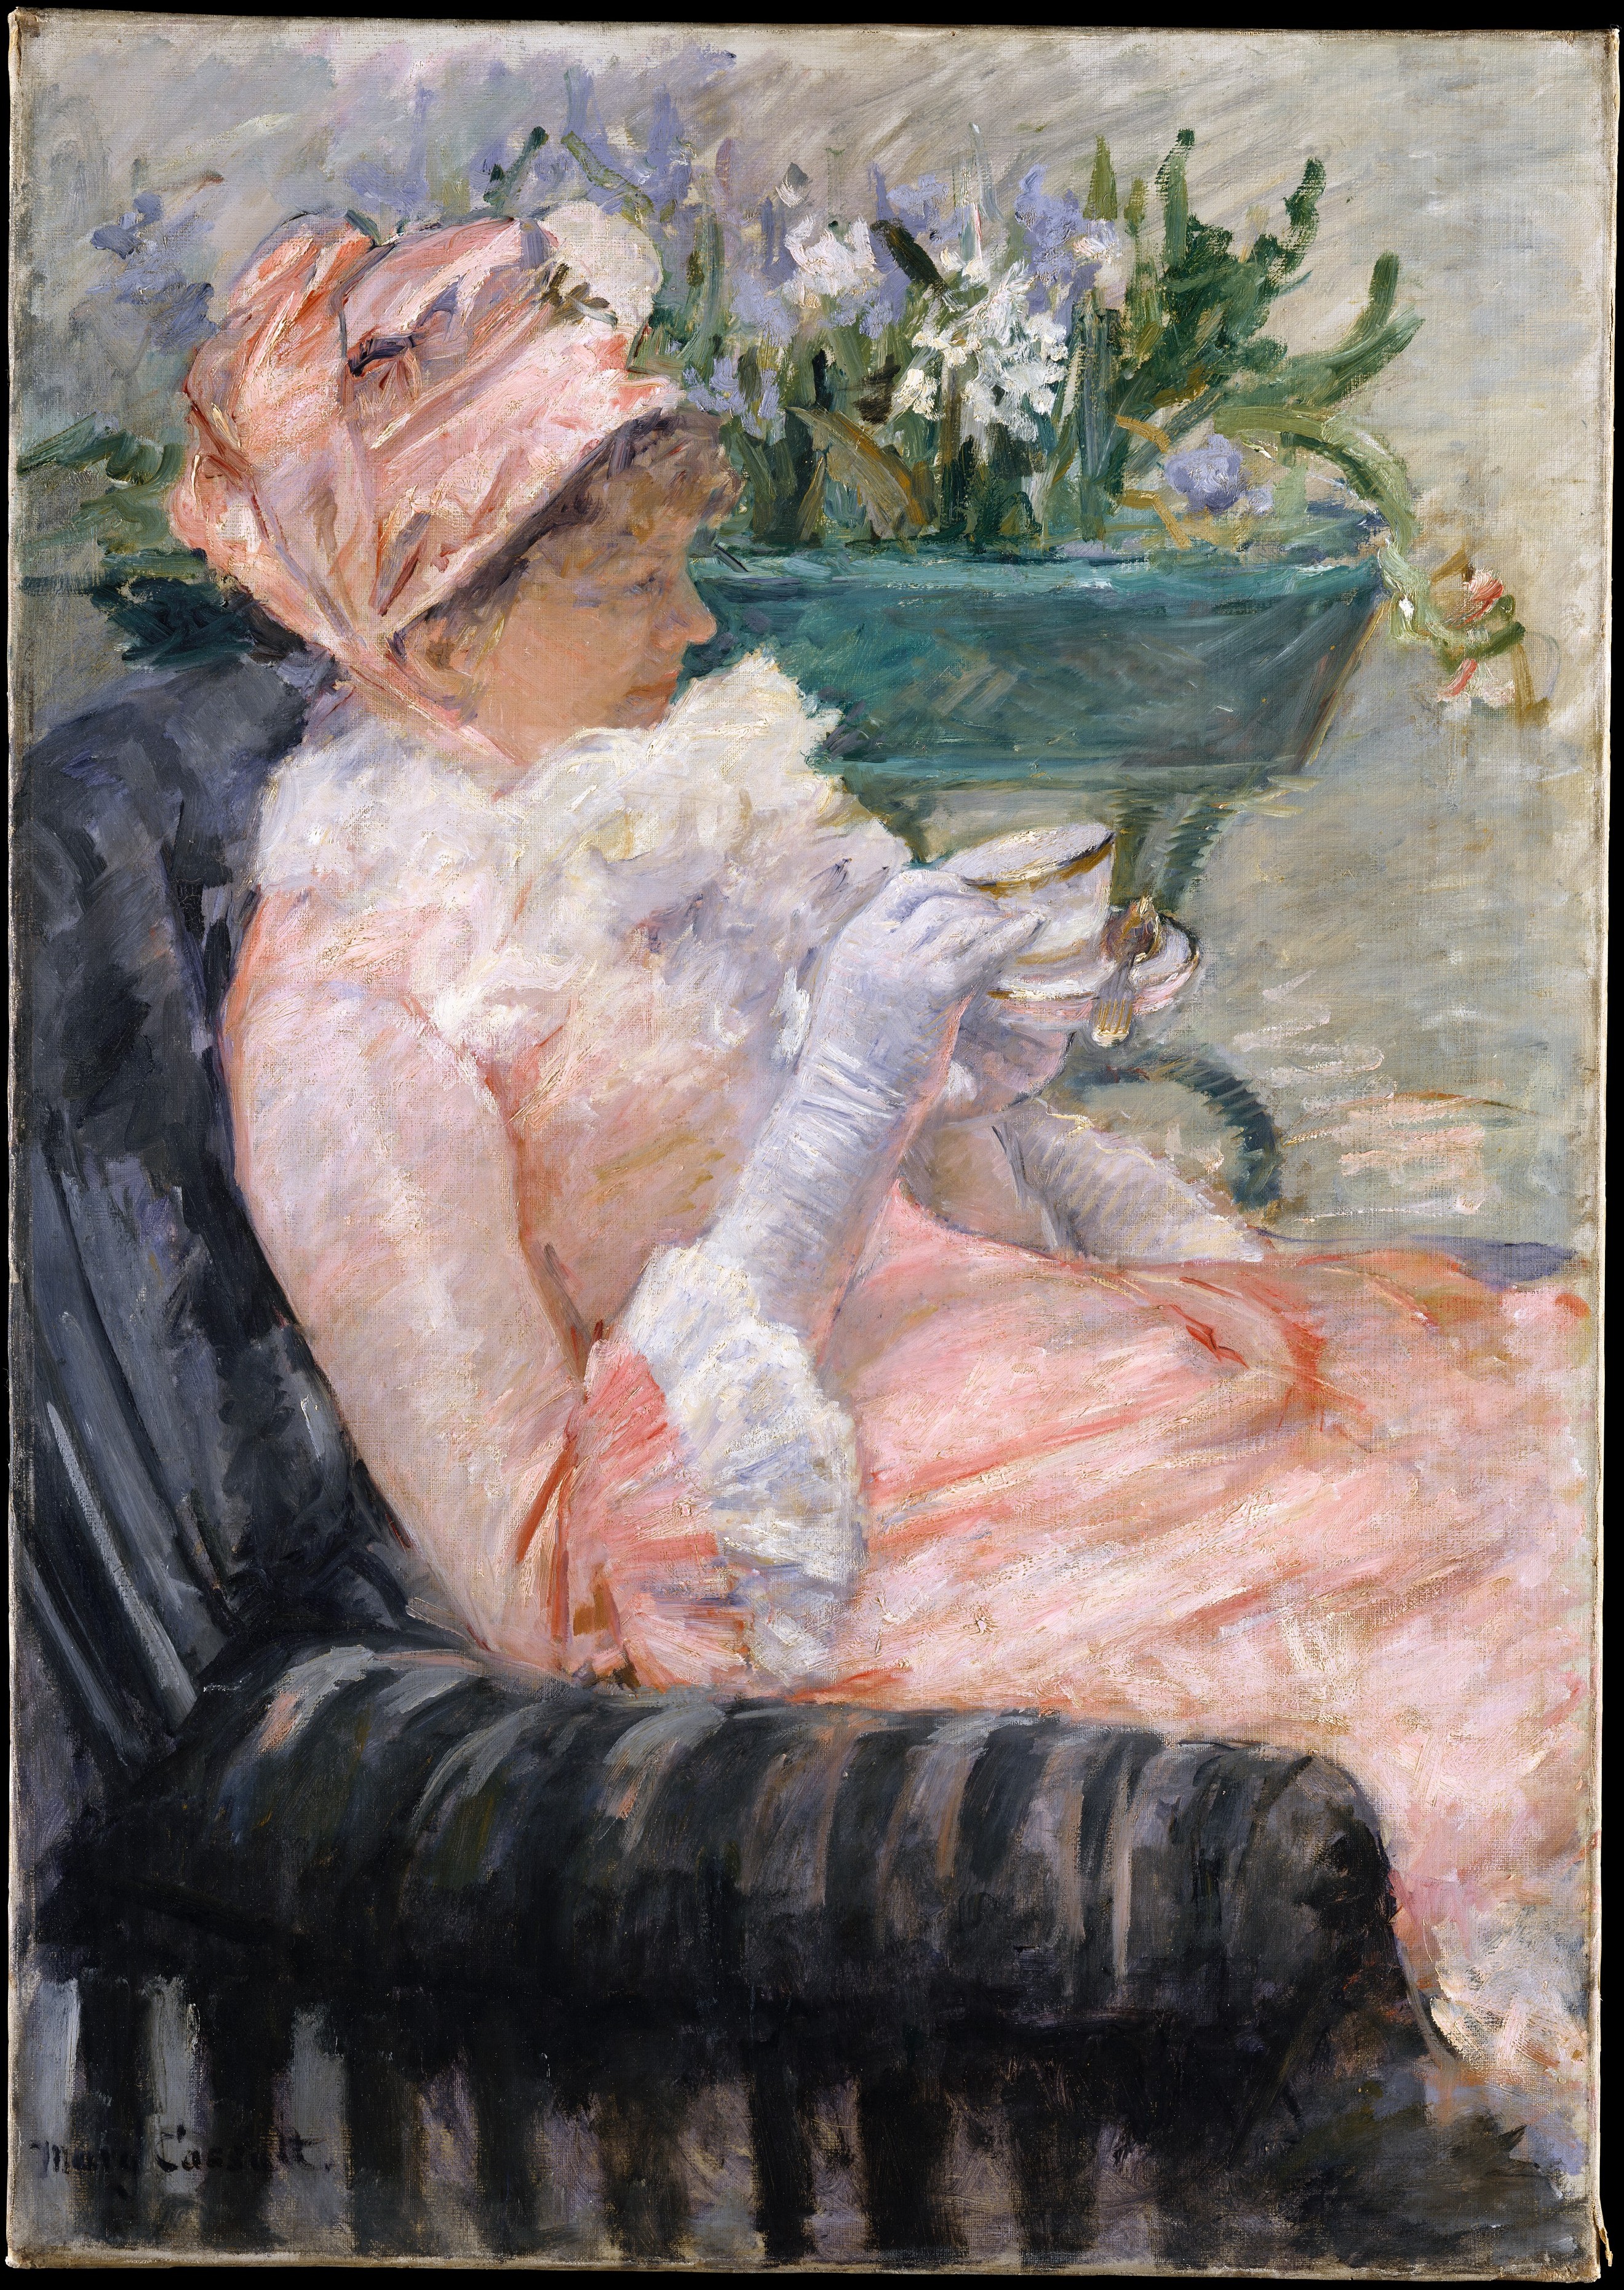 La taza de té by Mary Cassatt - ca. 1880-1881 - 92.4 x 65.4 cm Museo Metropolitano de Arte